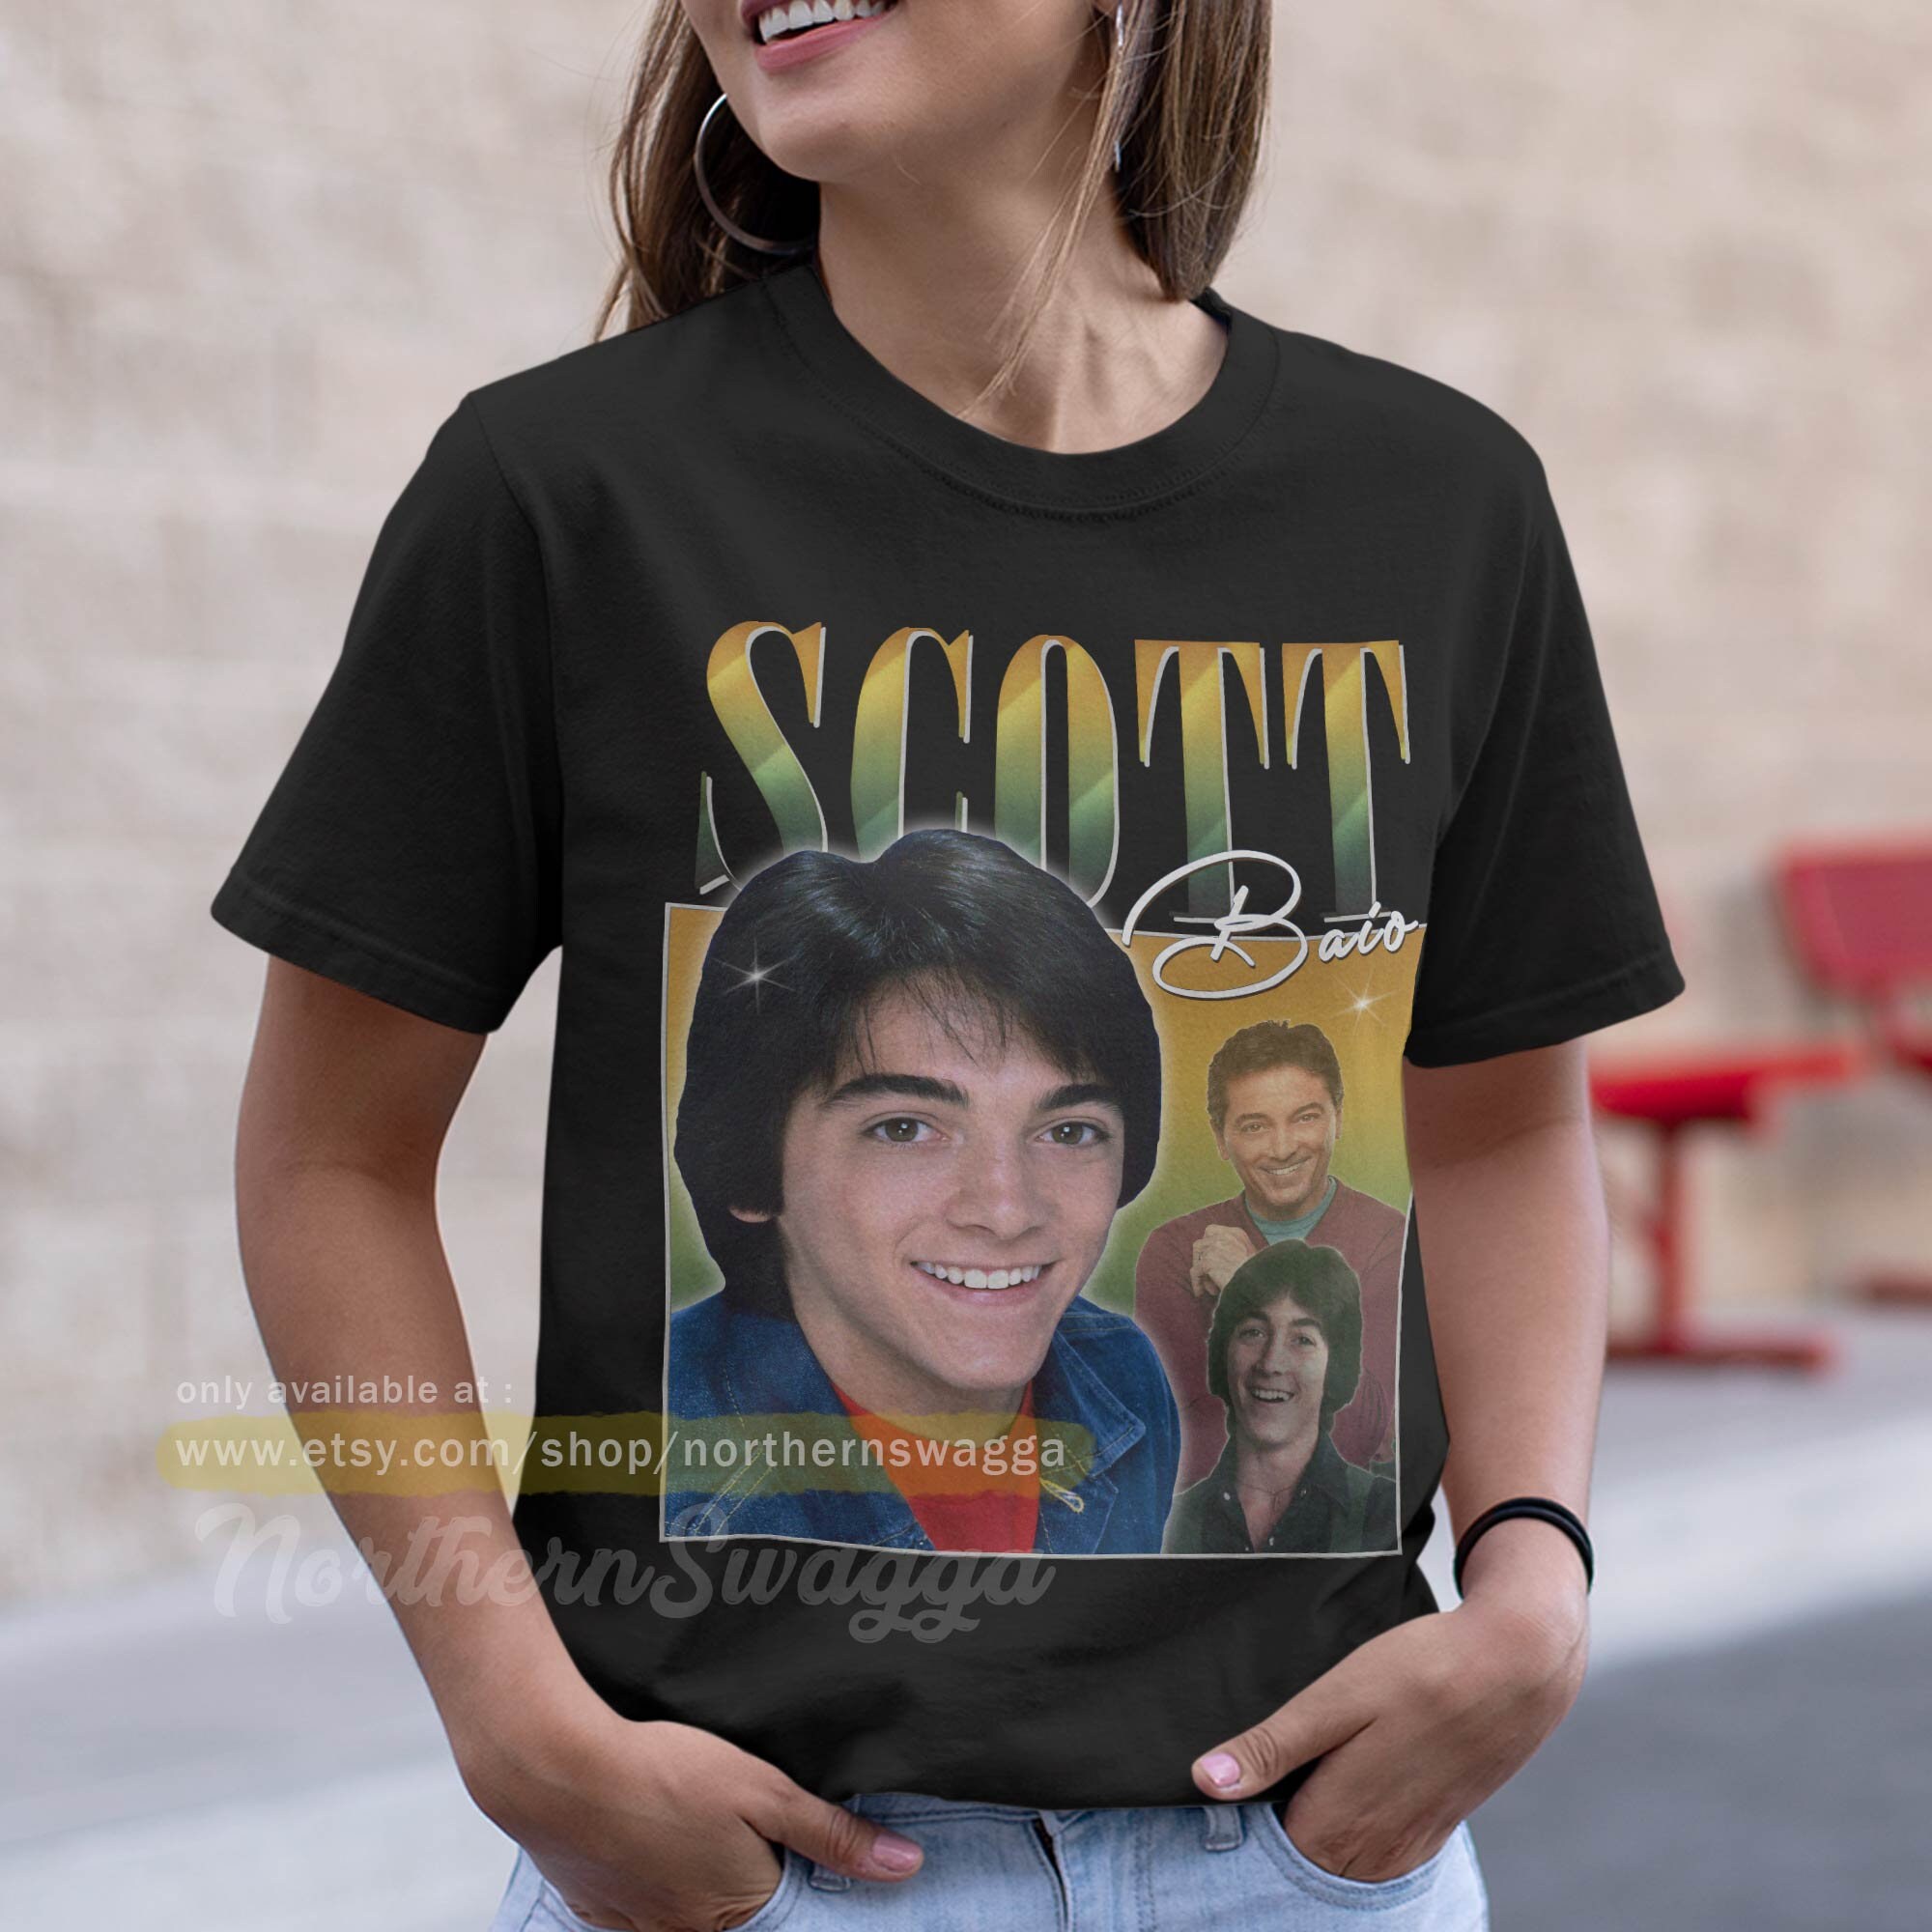 Scott baio shirt design retro style cool fan art t-shirt 90s poster 261 tee